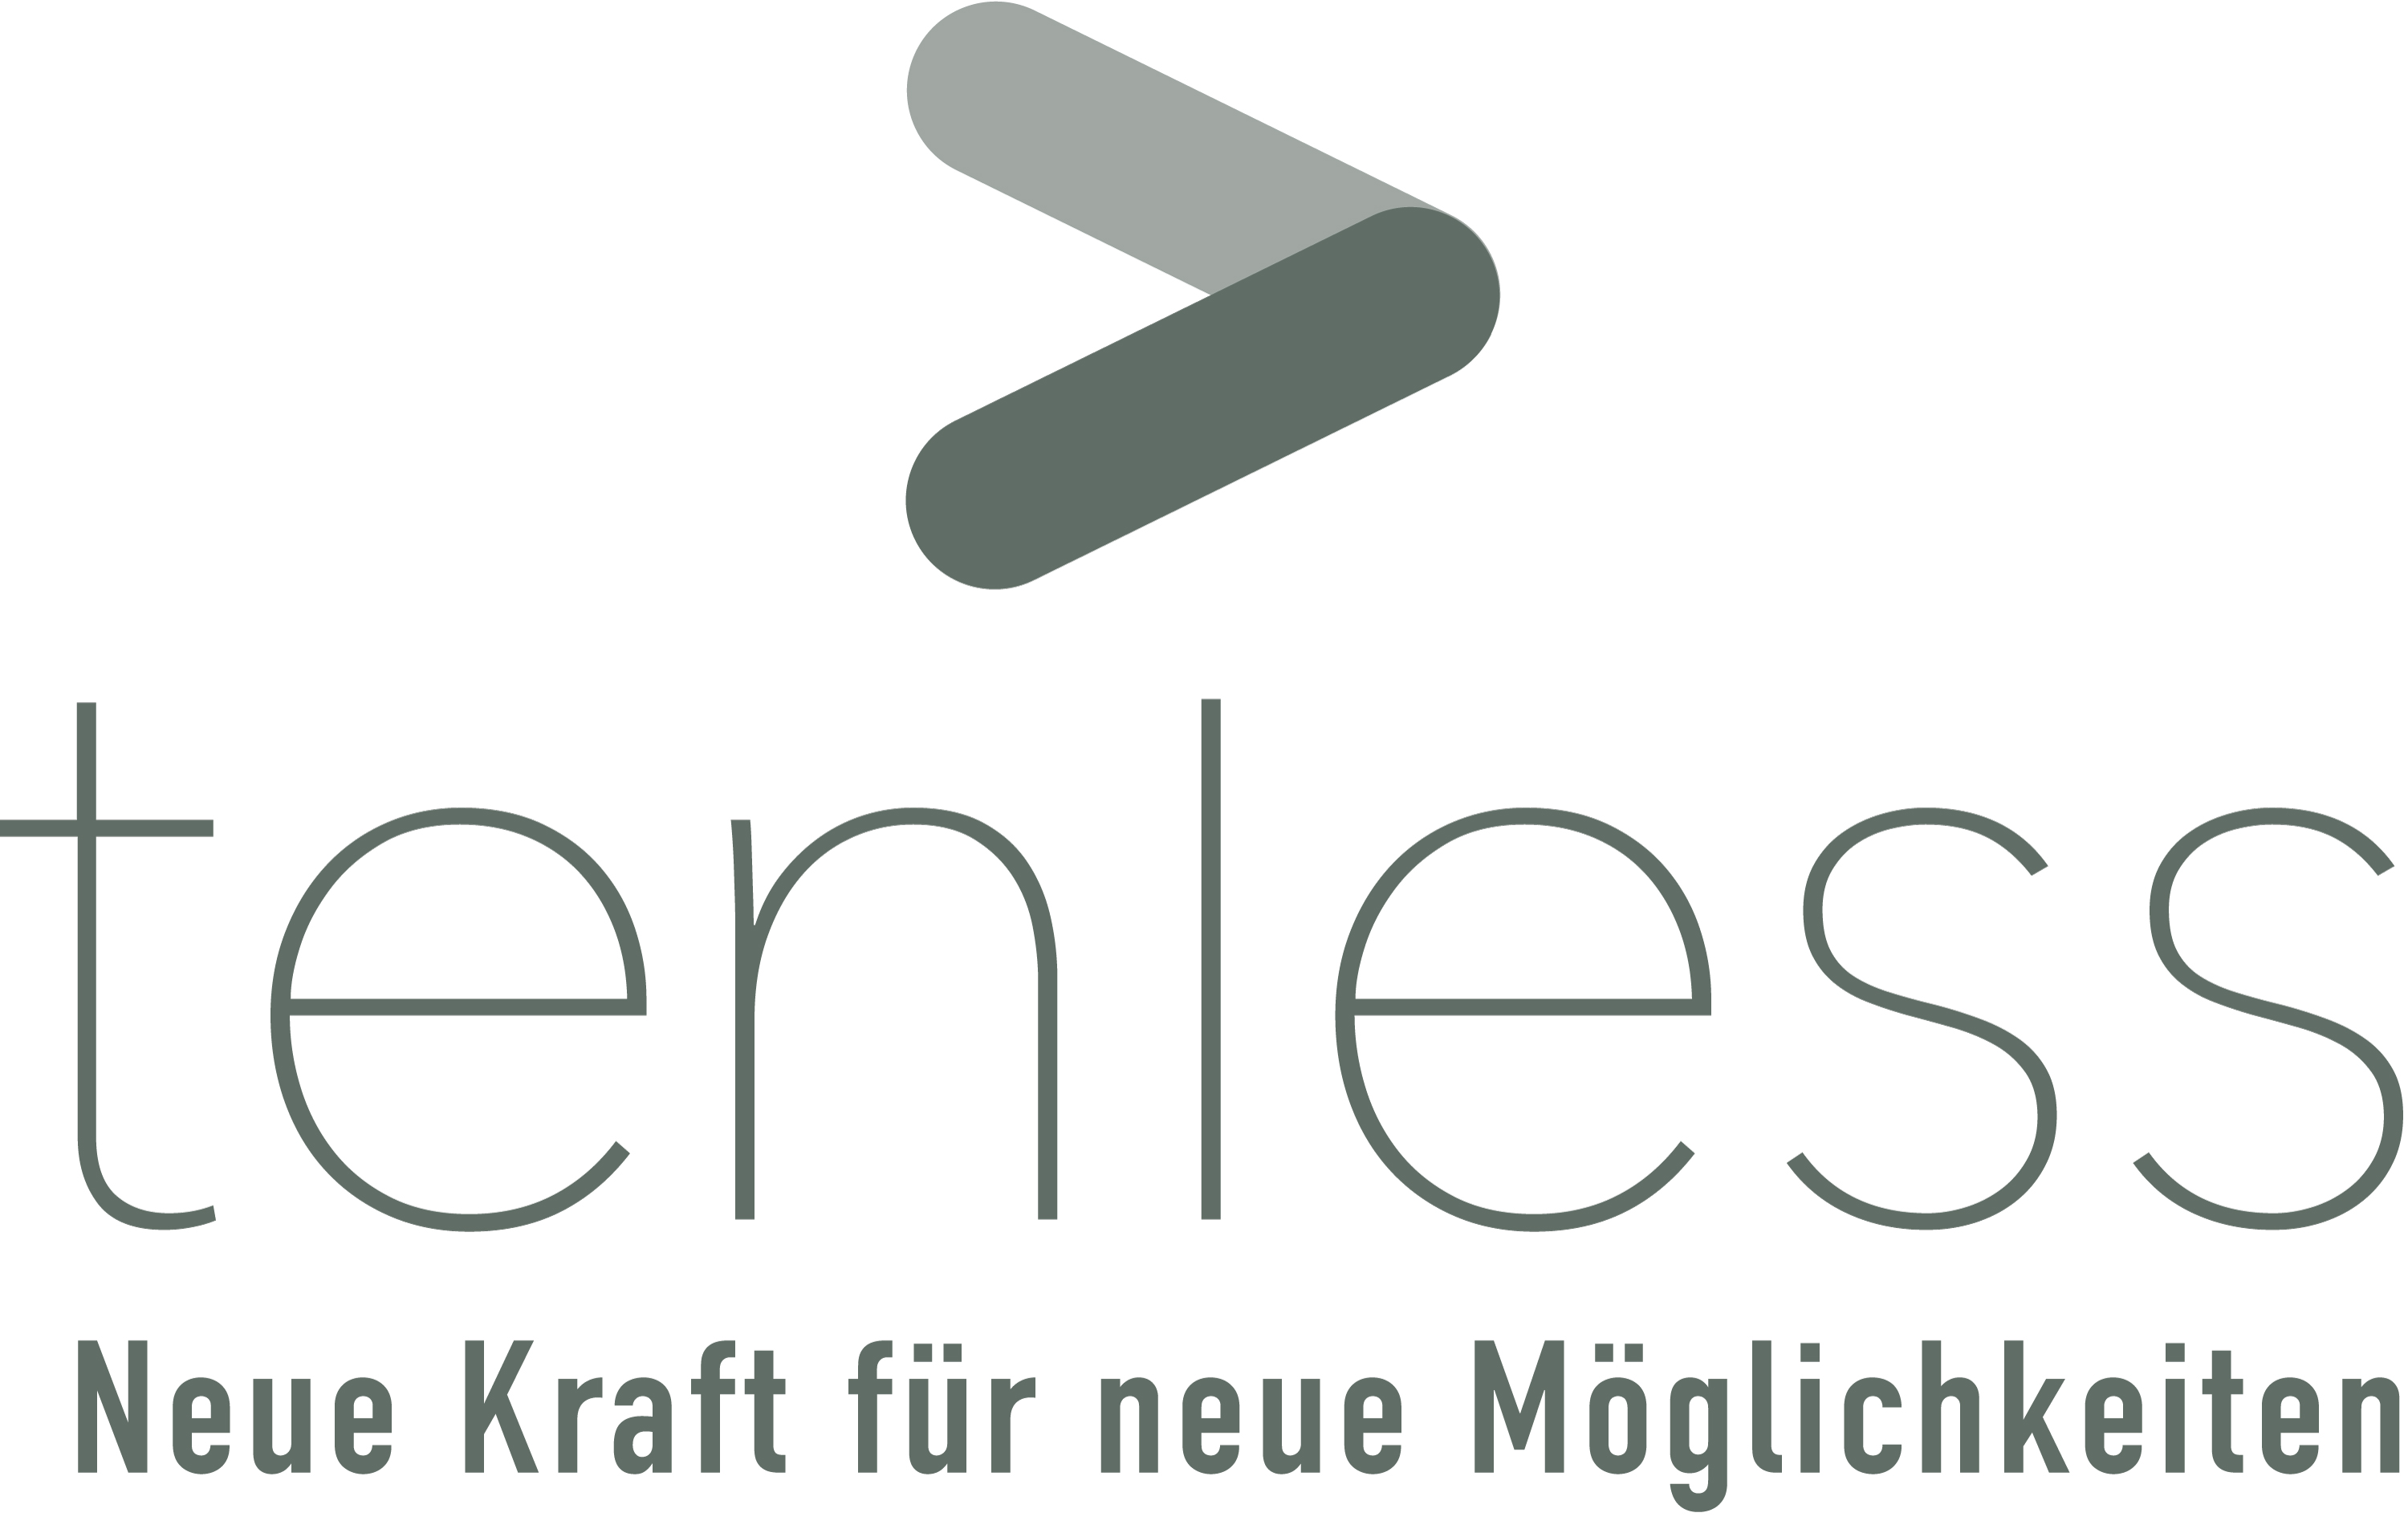 Logo_tenless_claim_greige_vertical_large